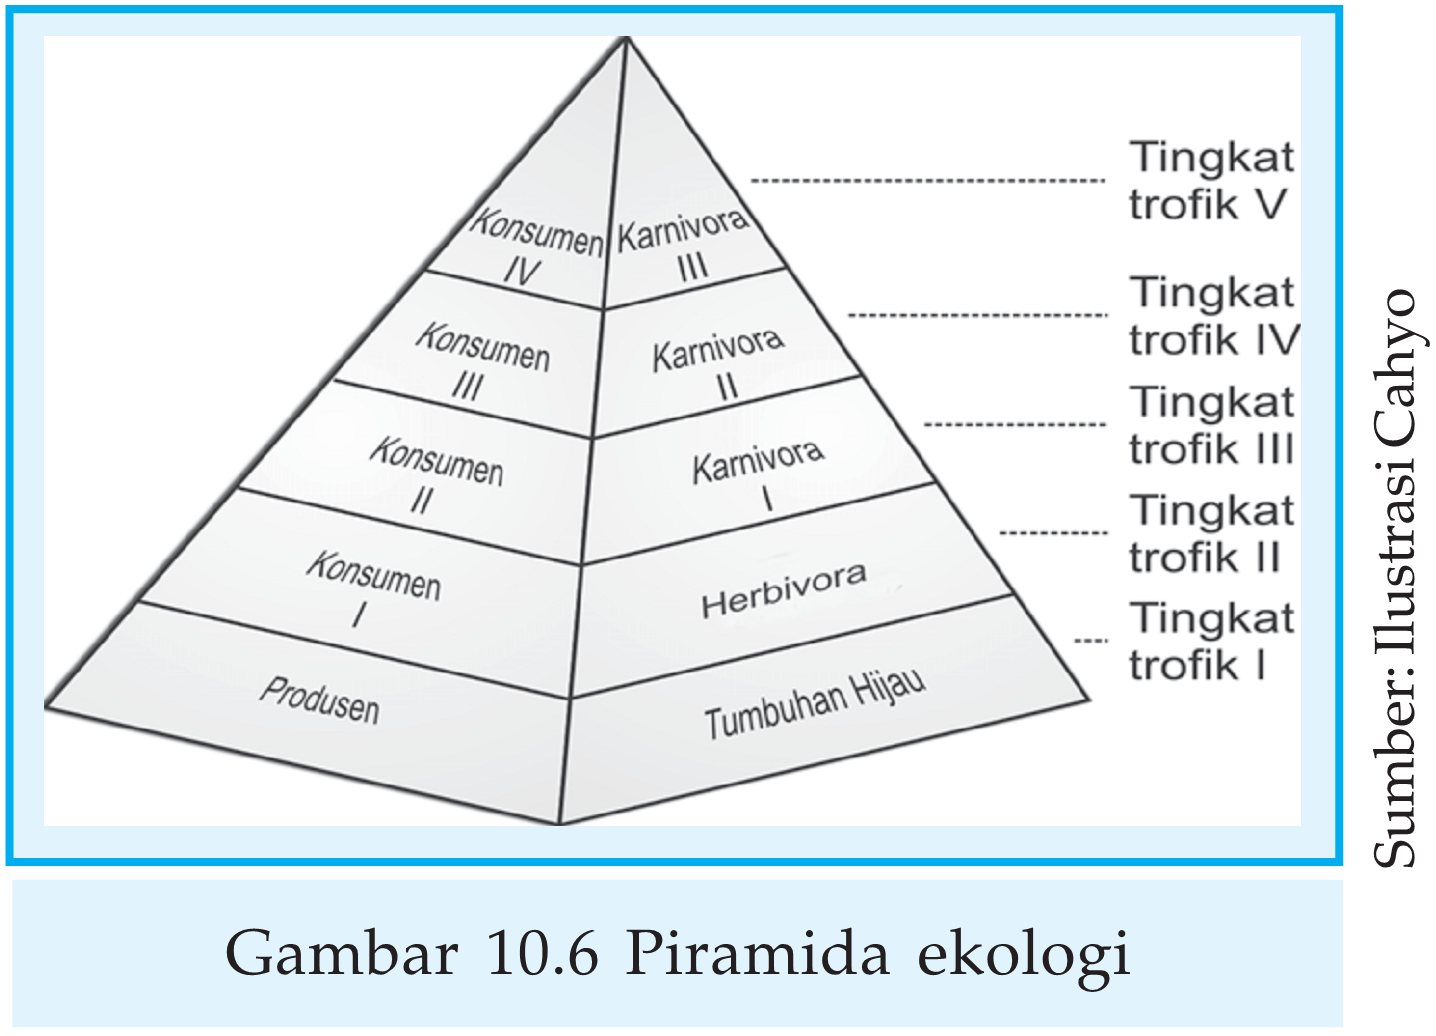 Piramida Ekologi  Trisanto Timi